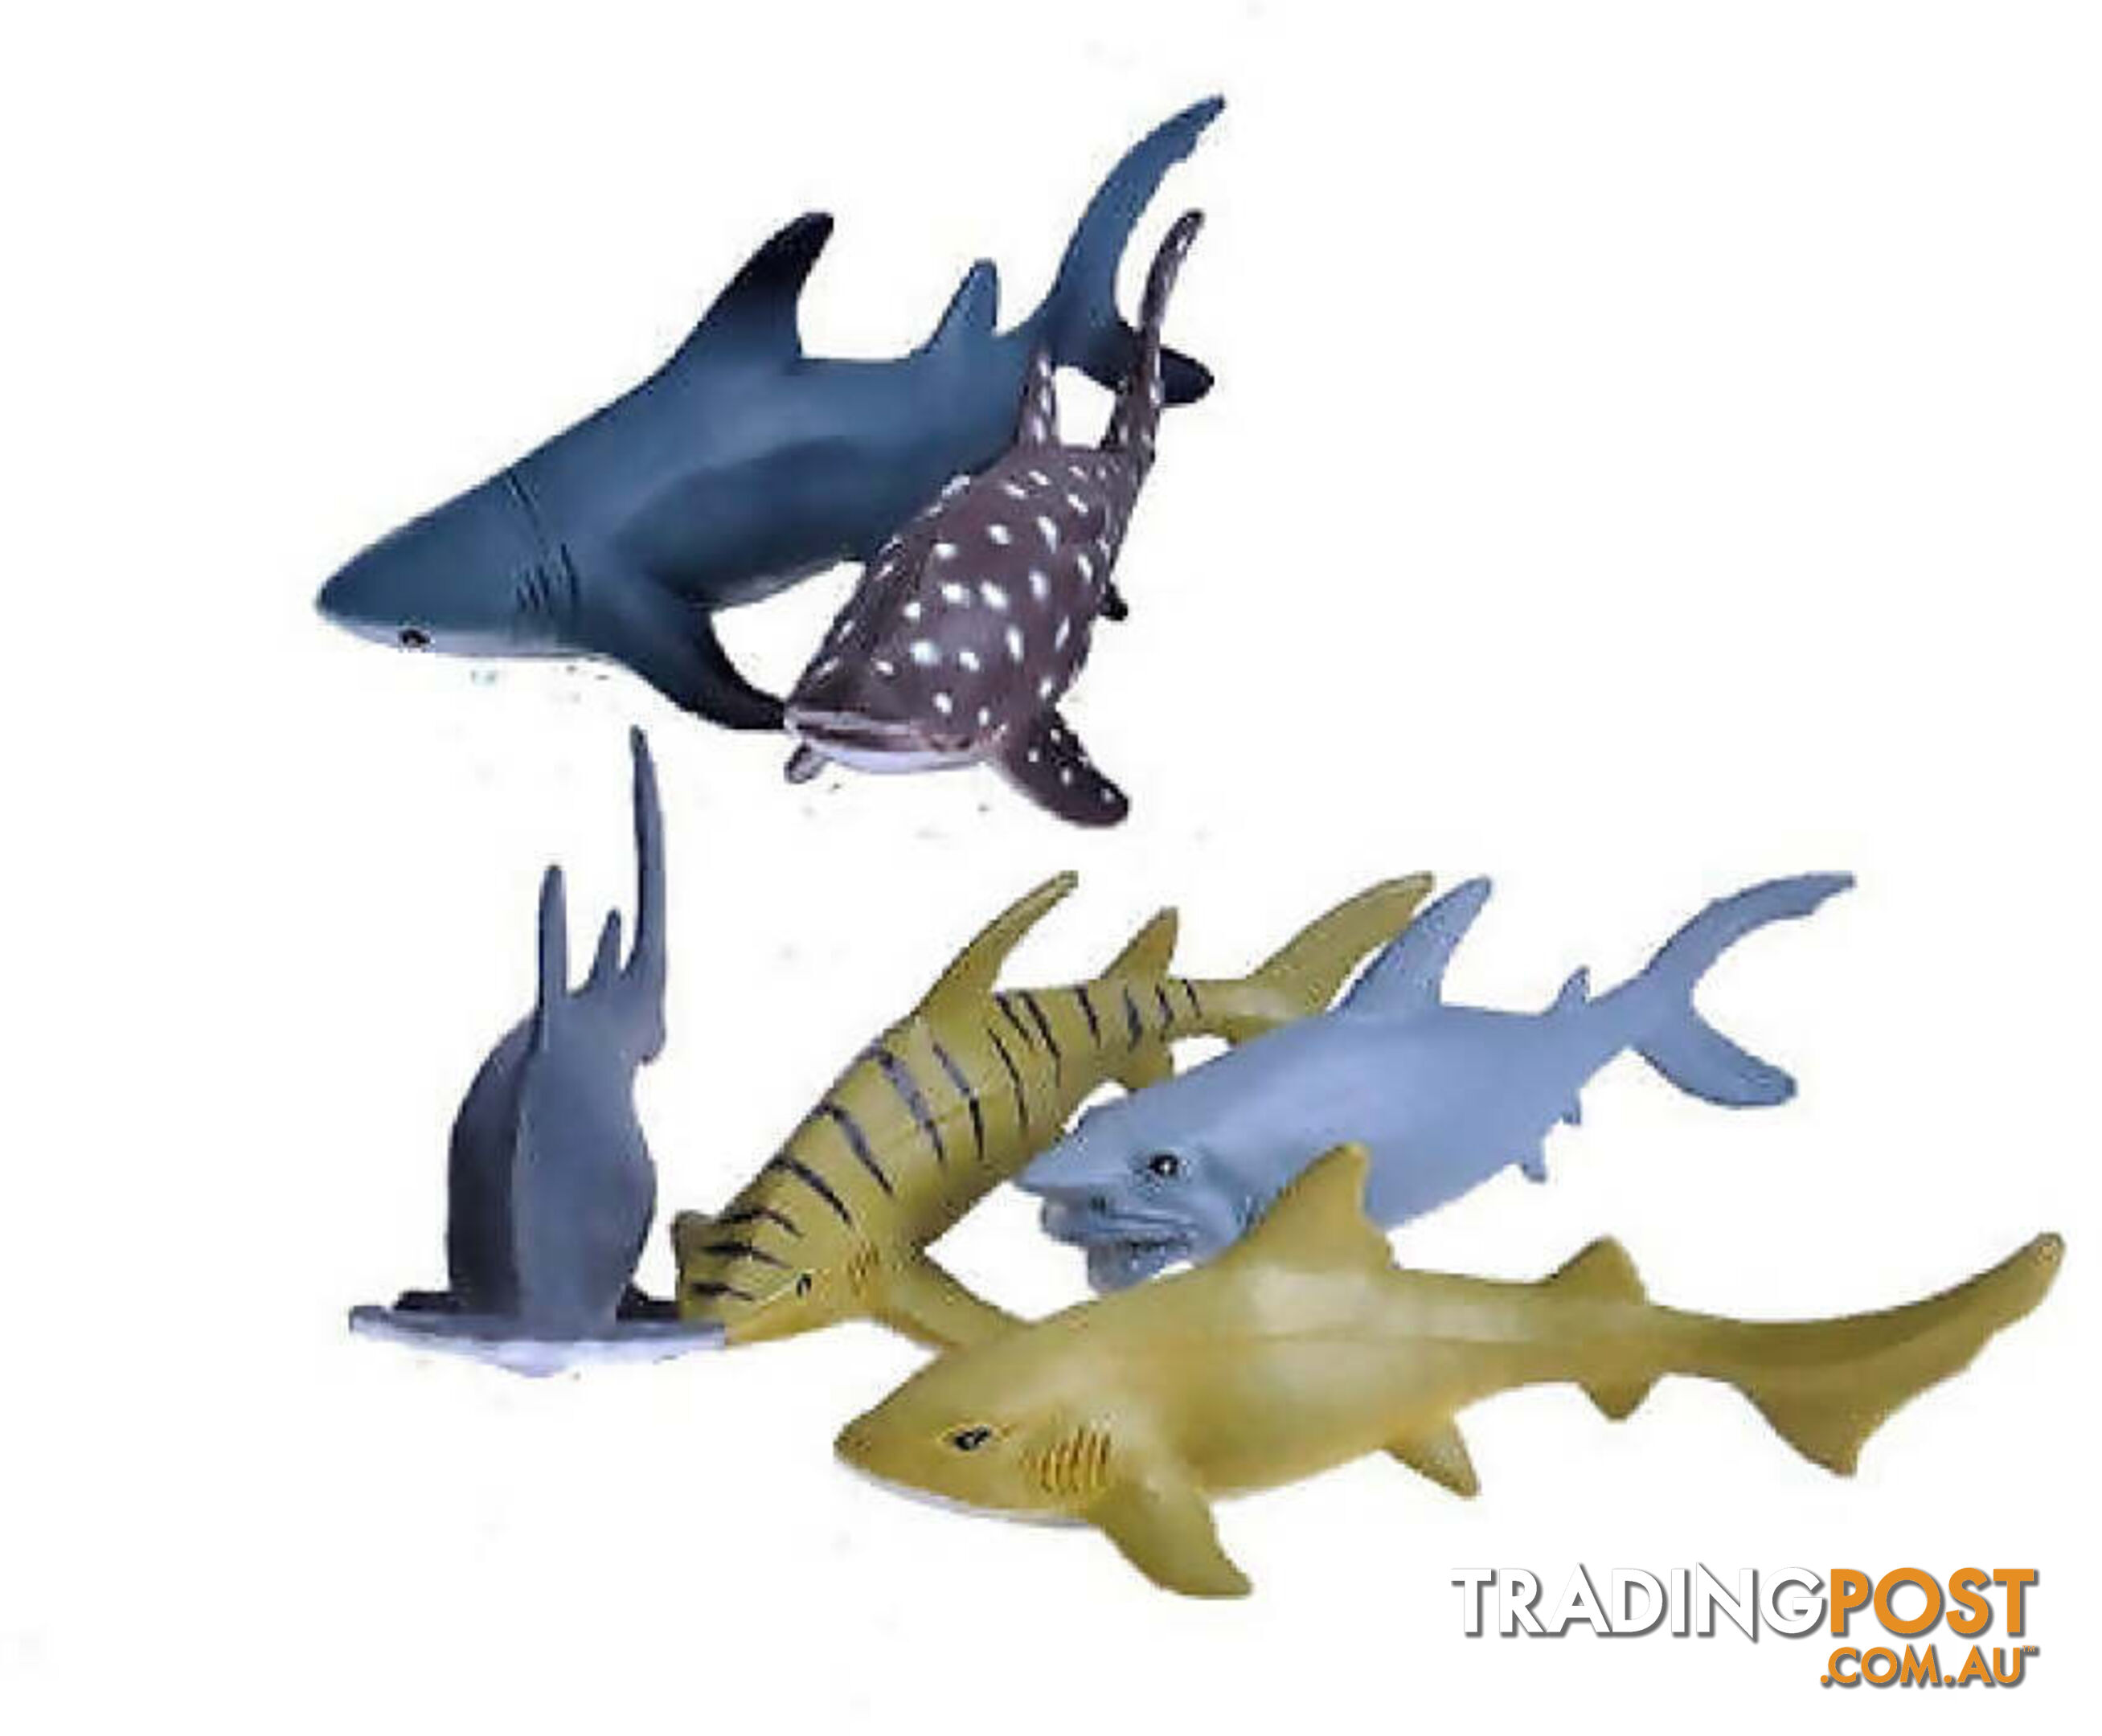 Wild Republic - Polybag Shark Collection - Wr64577 - 092389645774